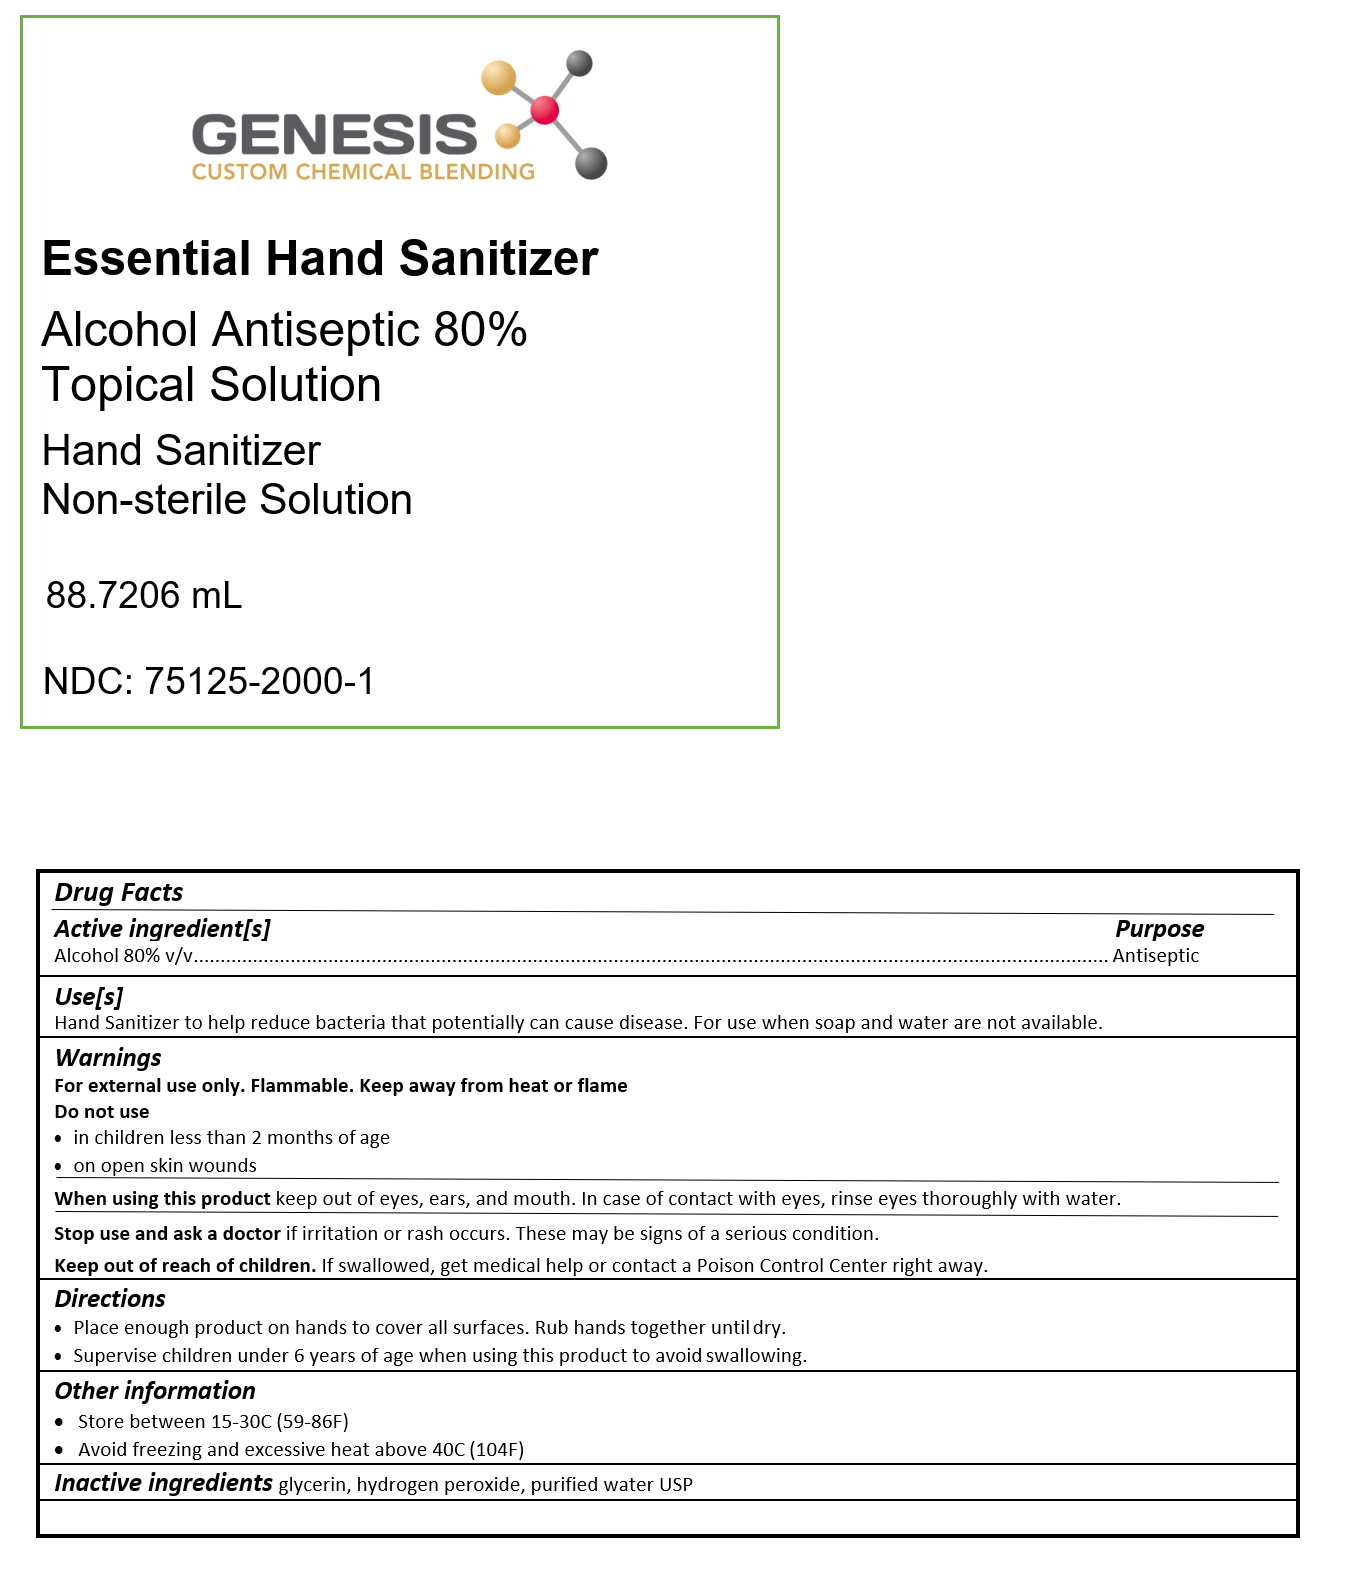 Ethanol80-handsan-consumer-75125-2000-1